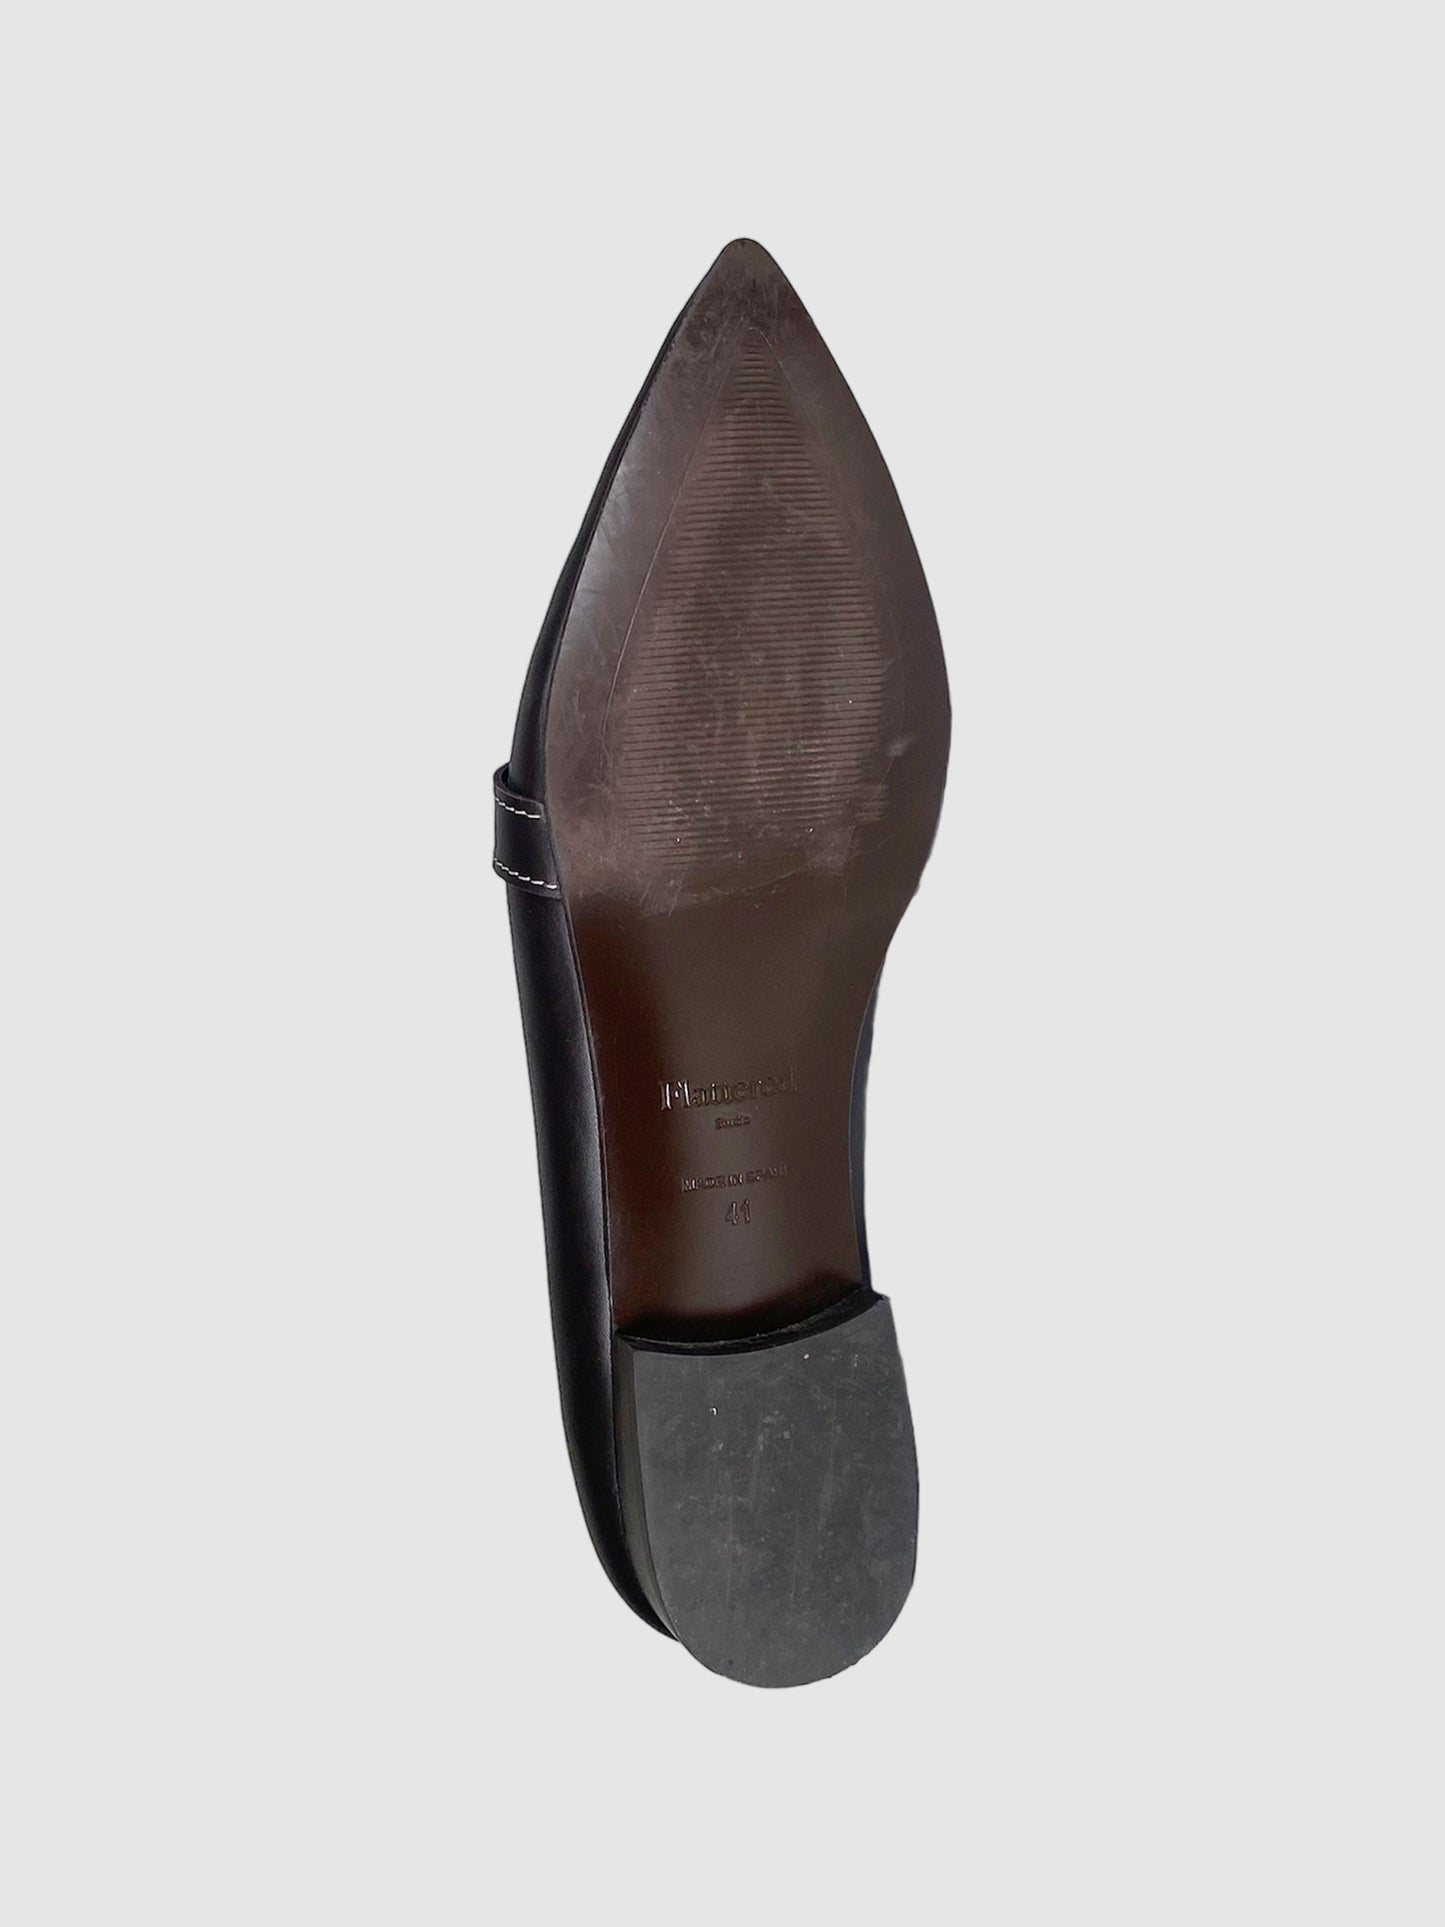 Flattered Leather Loafer - Size 41